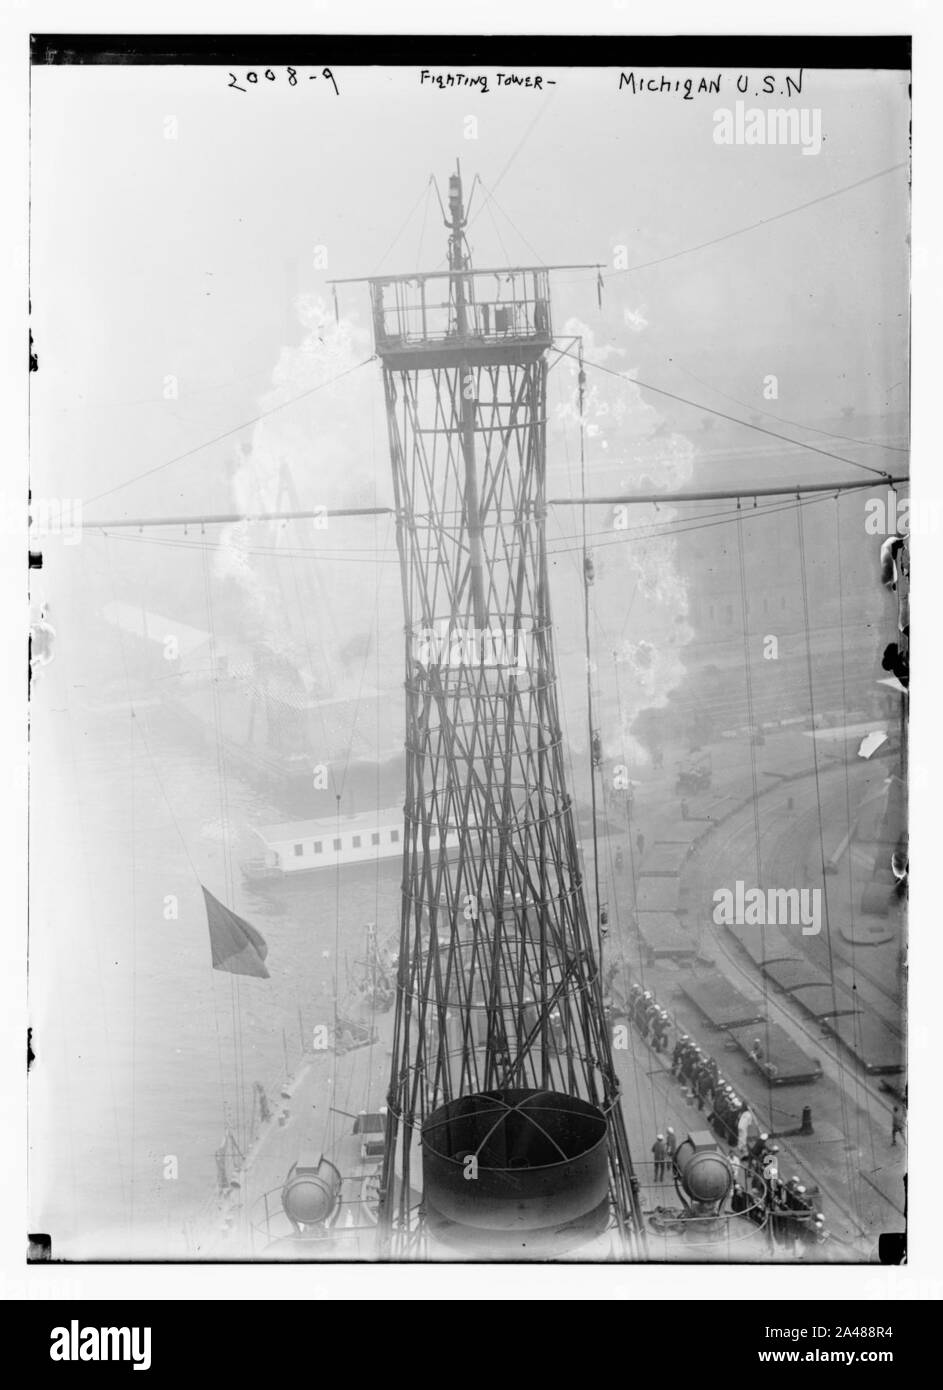 Fighting tower, ‘Michigan‘, U.S.N Stock Photo - Alamy